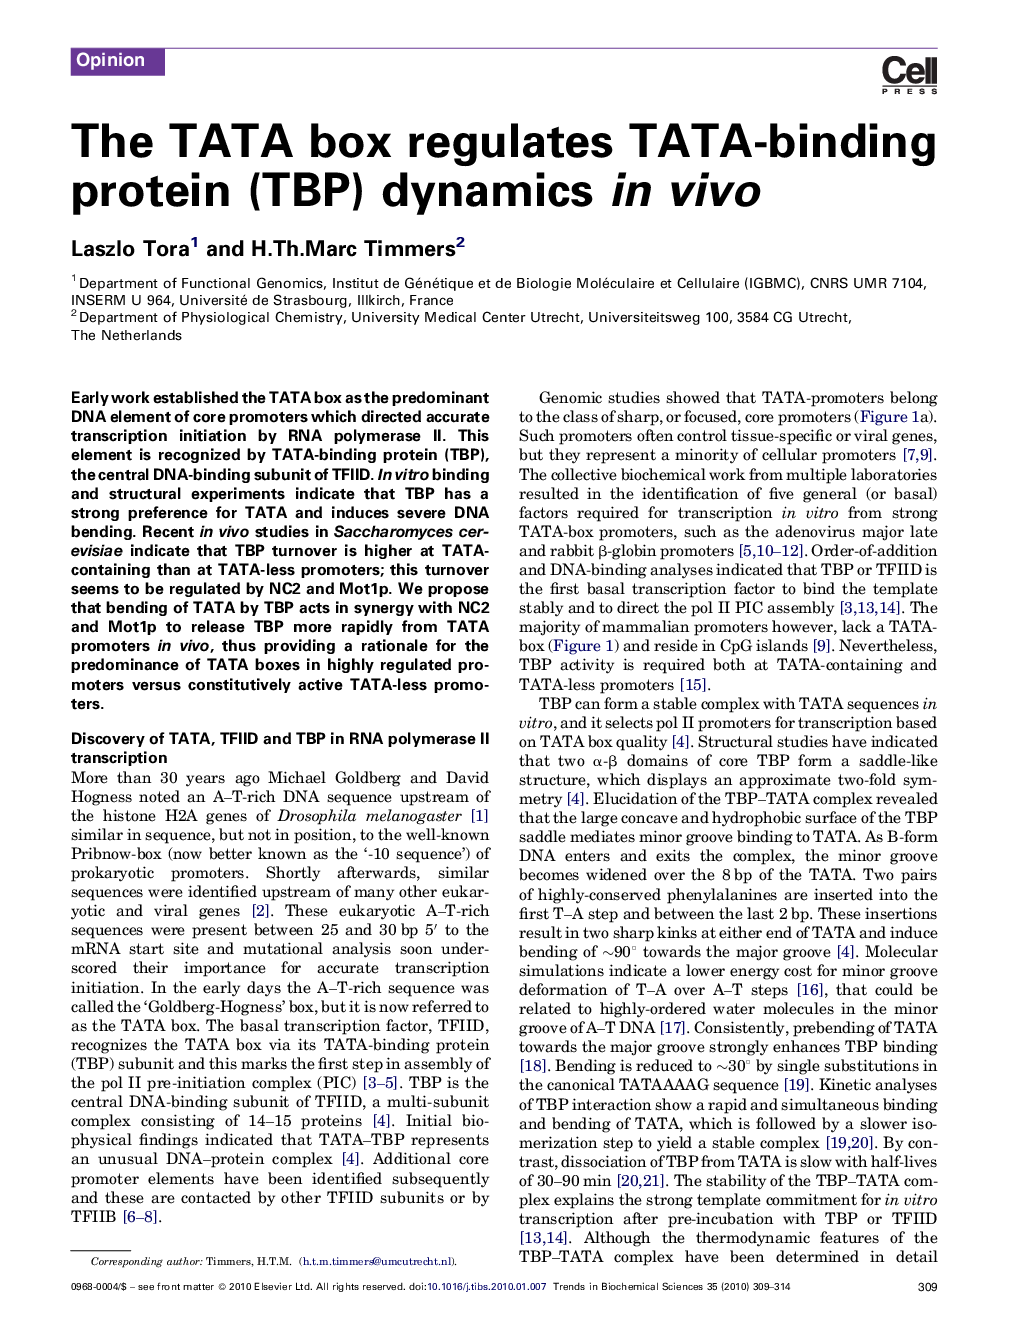 The TATA box regulates TATA-binding protein (TBP) dynamics in vivo